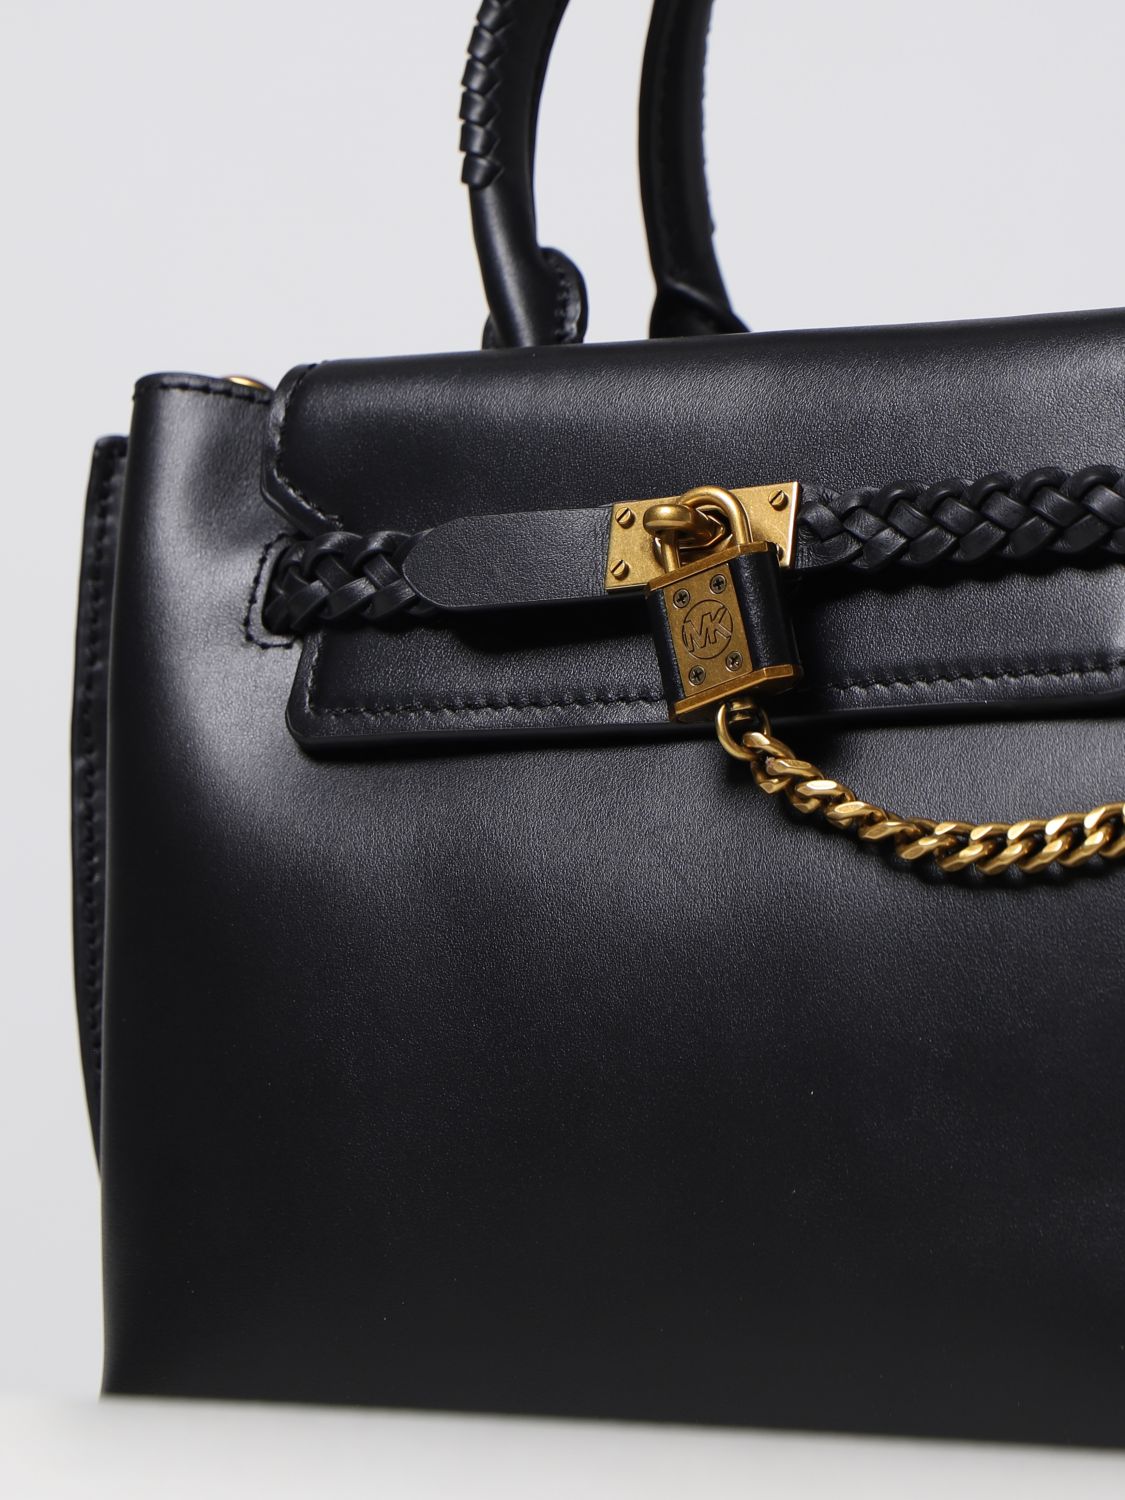 Michael Kors Outlet: handbag for woman - Black | Michael Kors handbag  30T2A9HS1L online on 